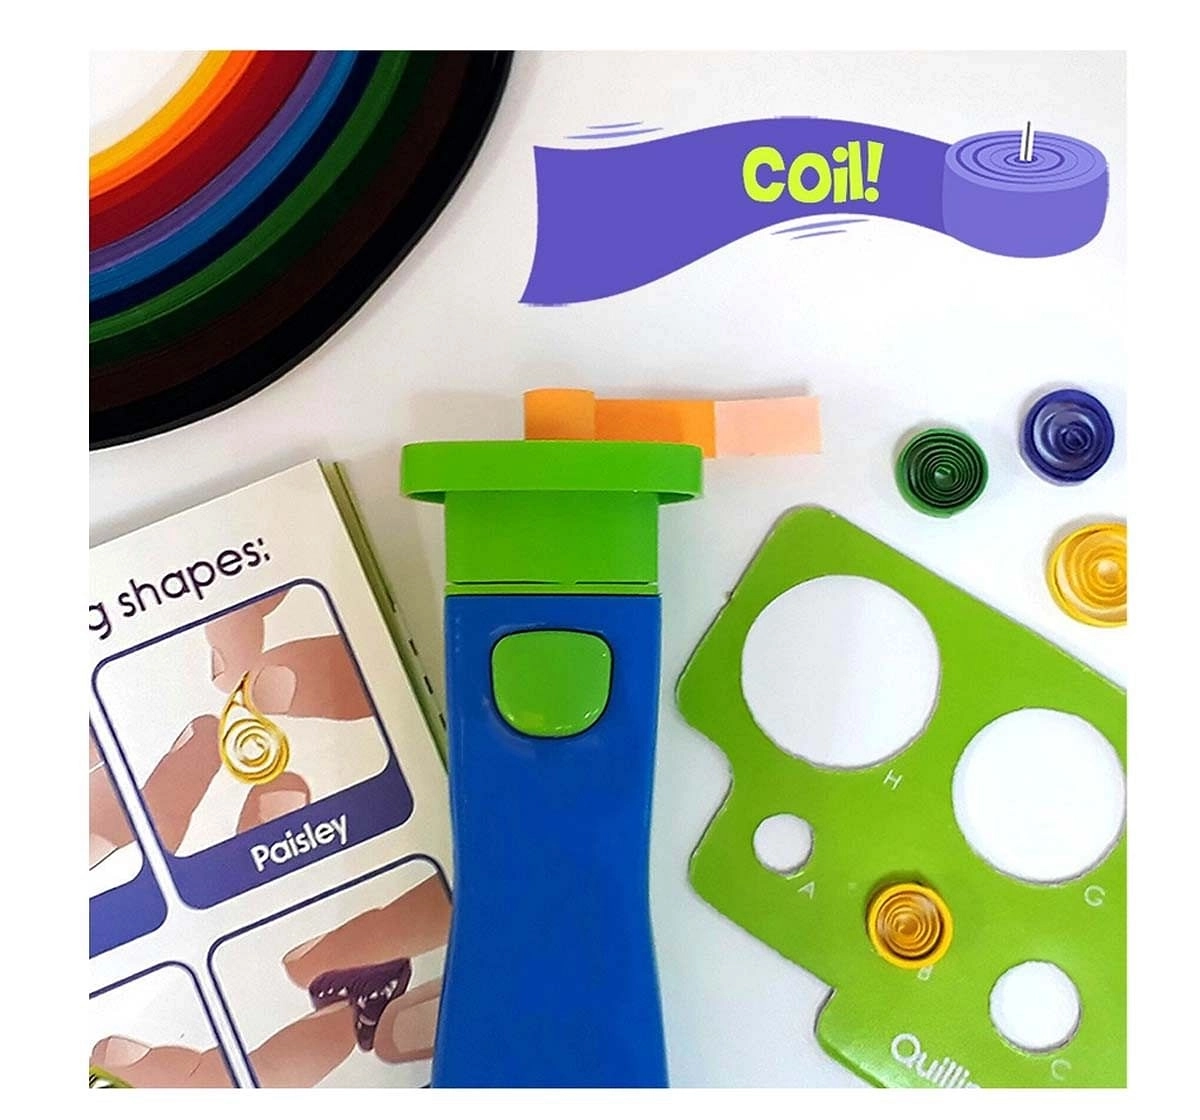 Imagimake Quill On Super Quiller & Buddies Blue DIY Art & Craft Kits for Kids age 6Y+